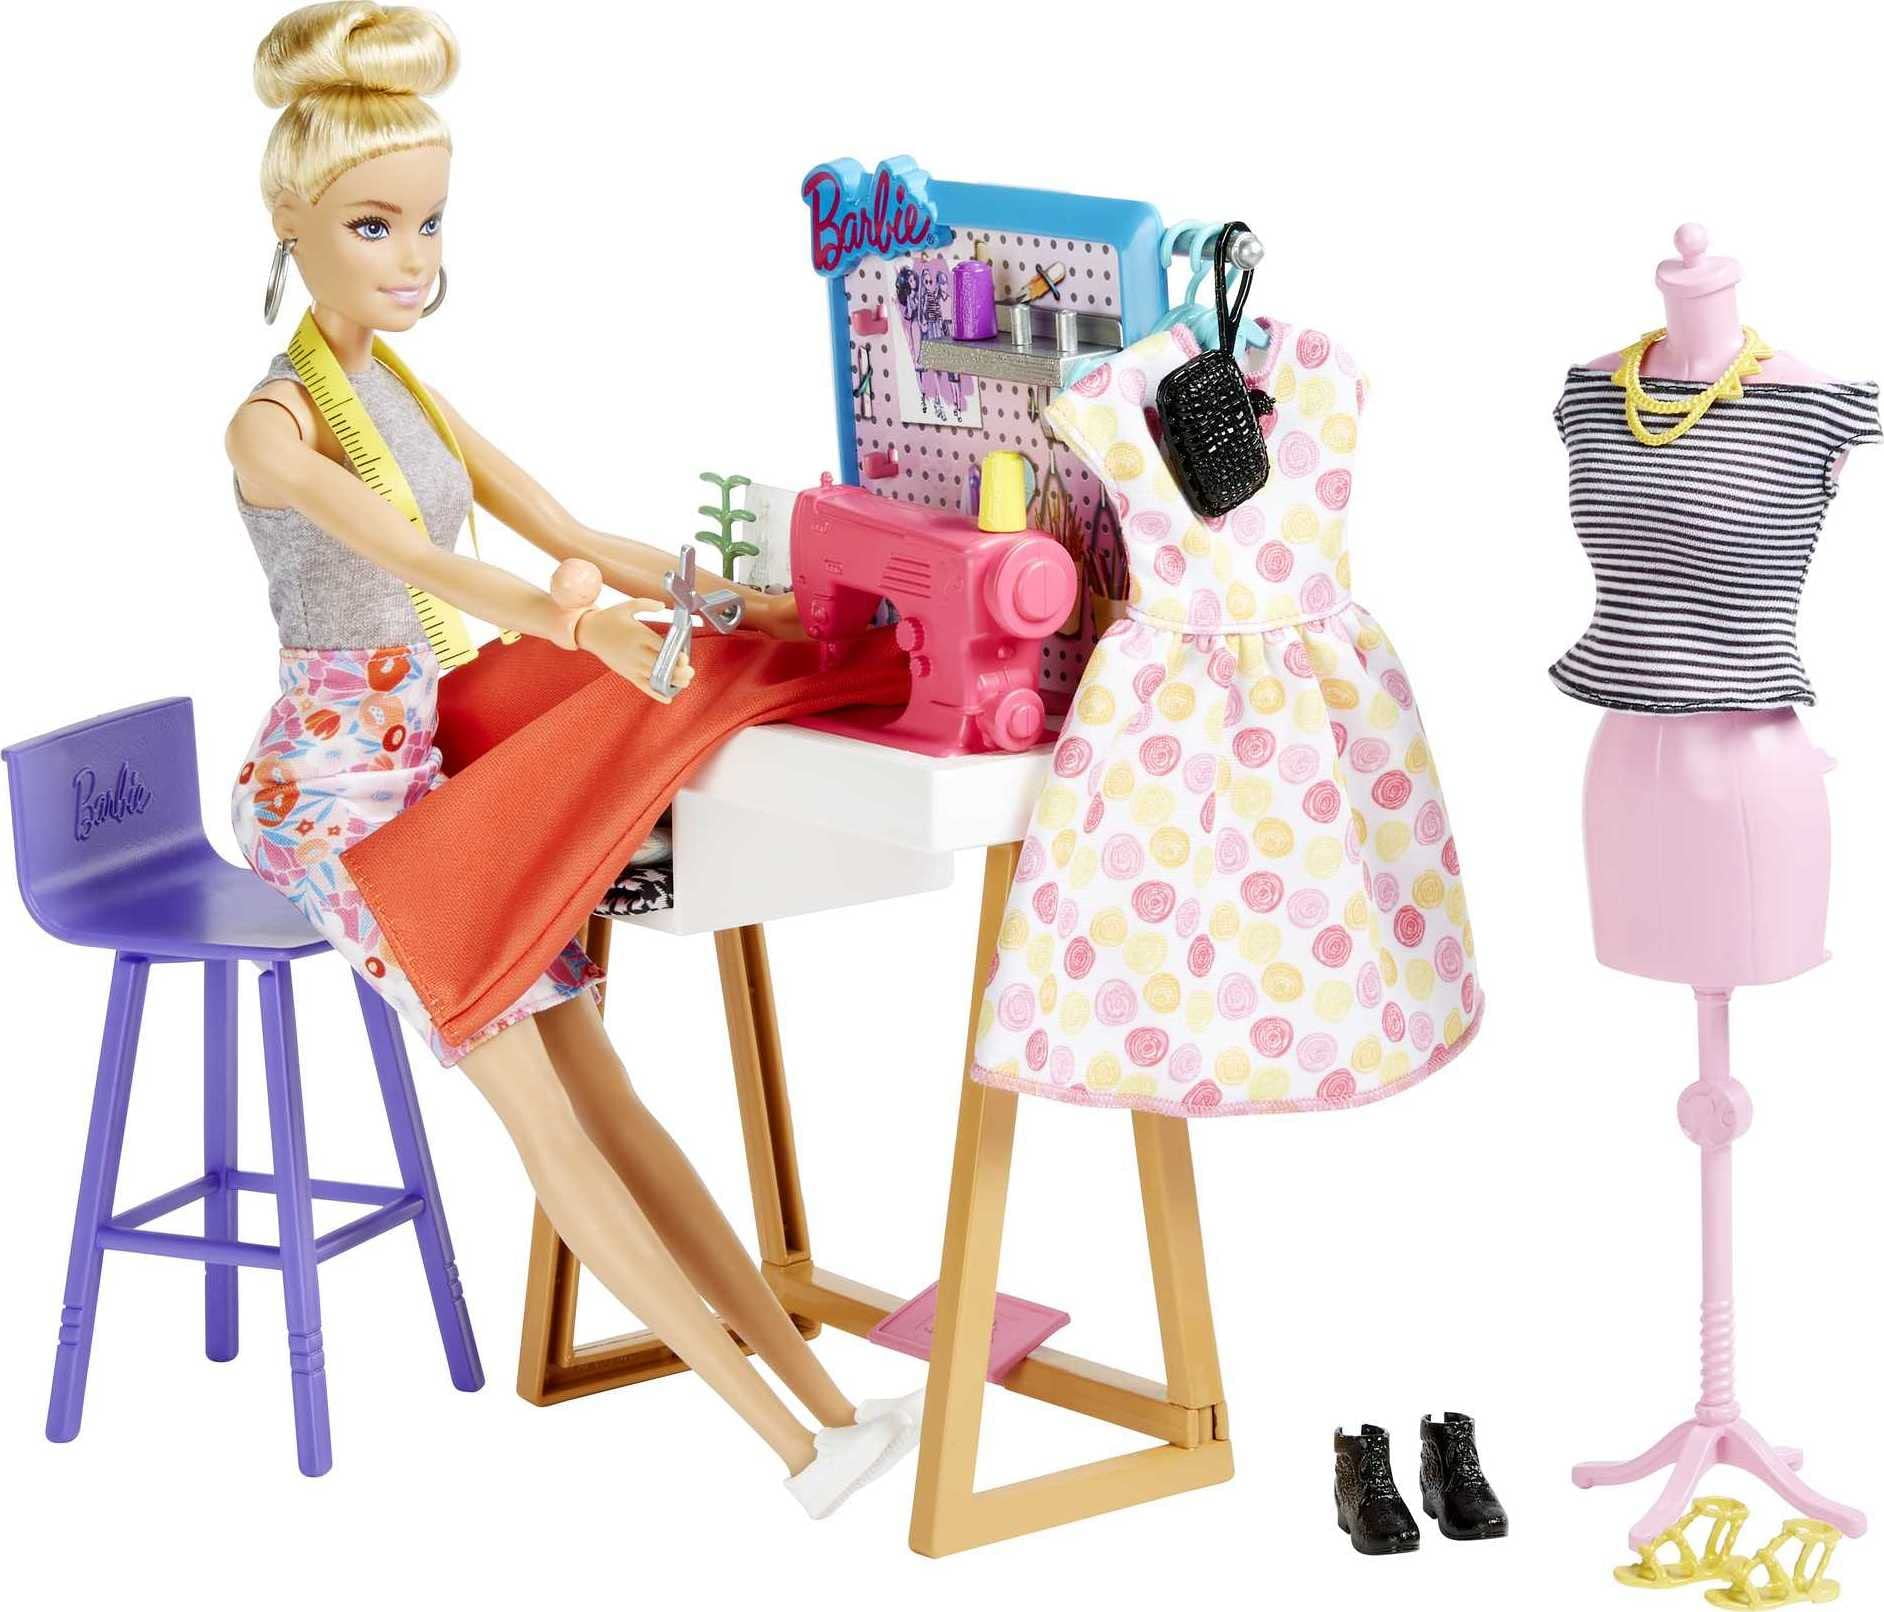 Barbie Fashion Design for Kids - Creatively Wild Art Studio - Sawyer